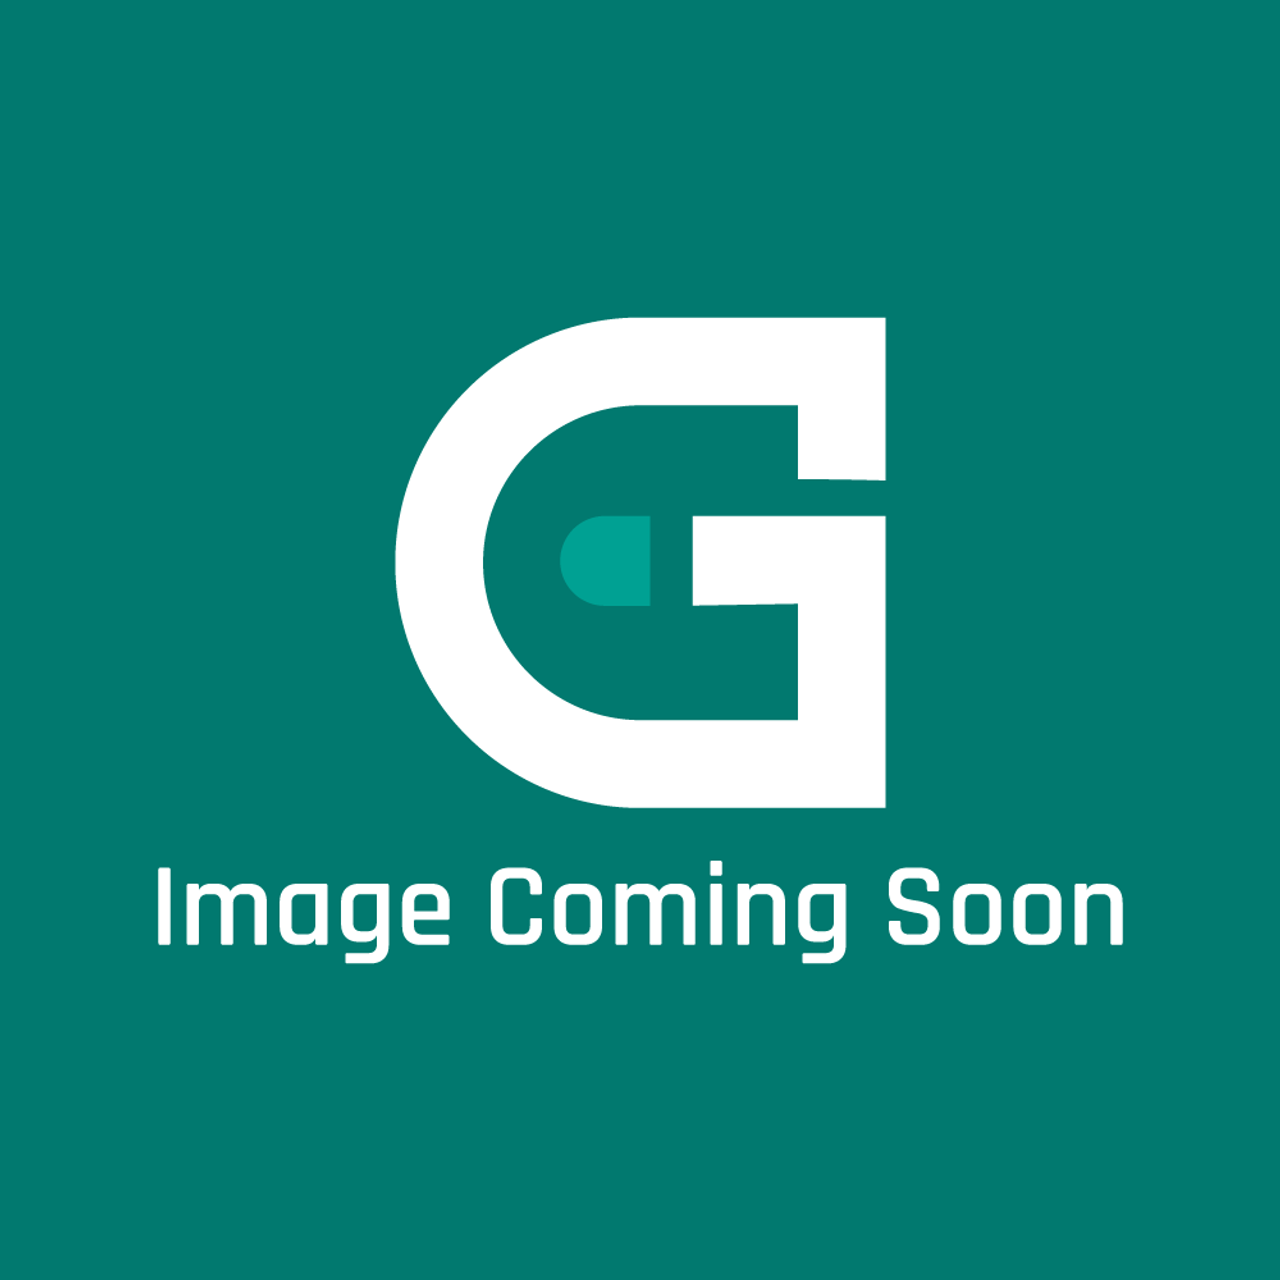 Garland CK4601580 - Flame Failure Valve Assy - Image Coming Soon!